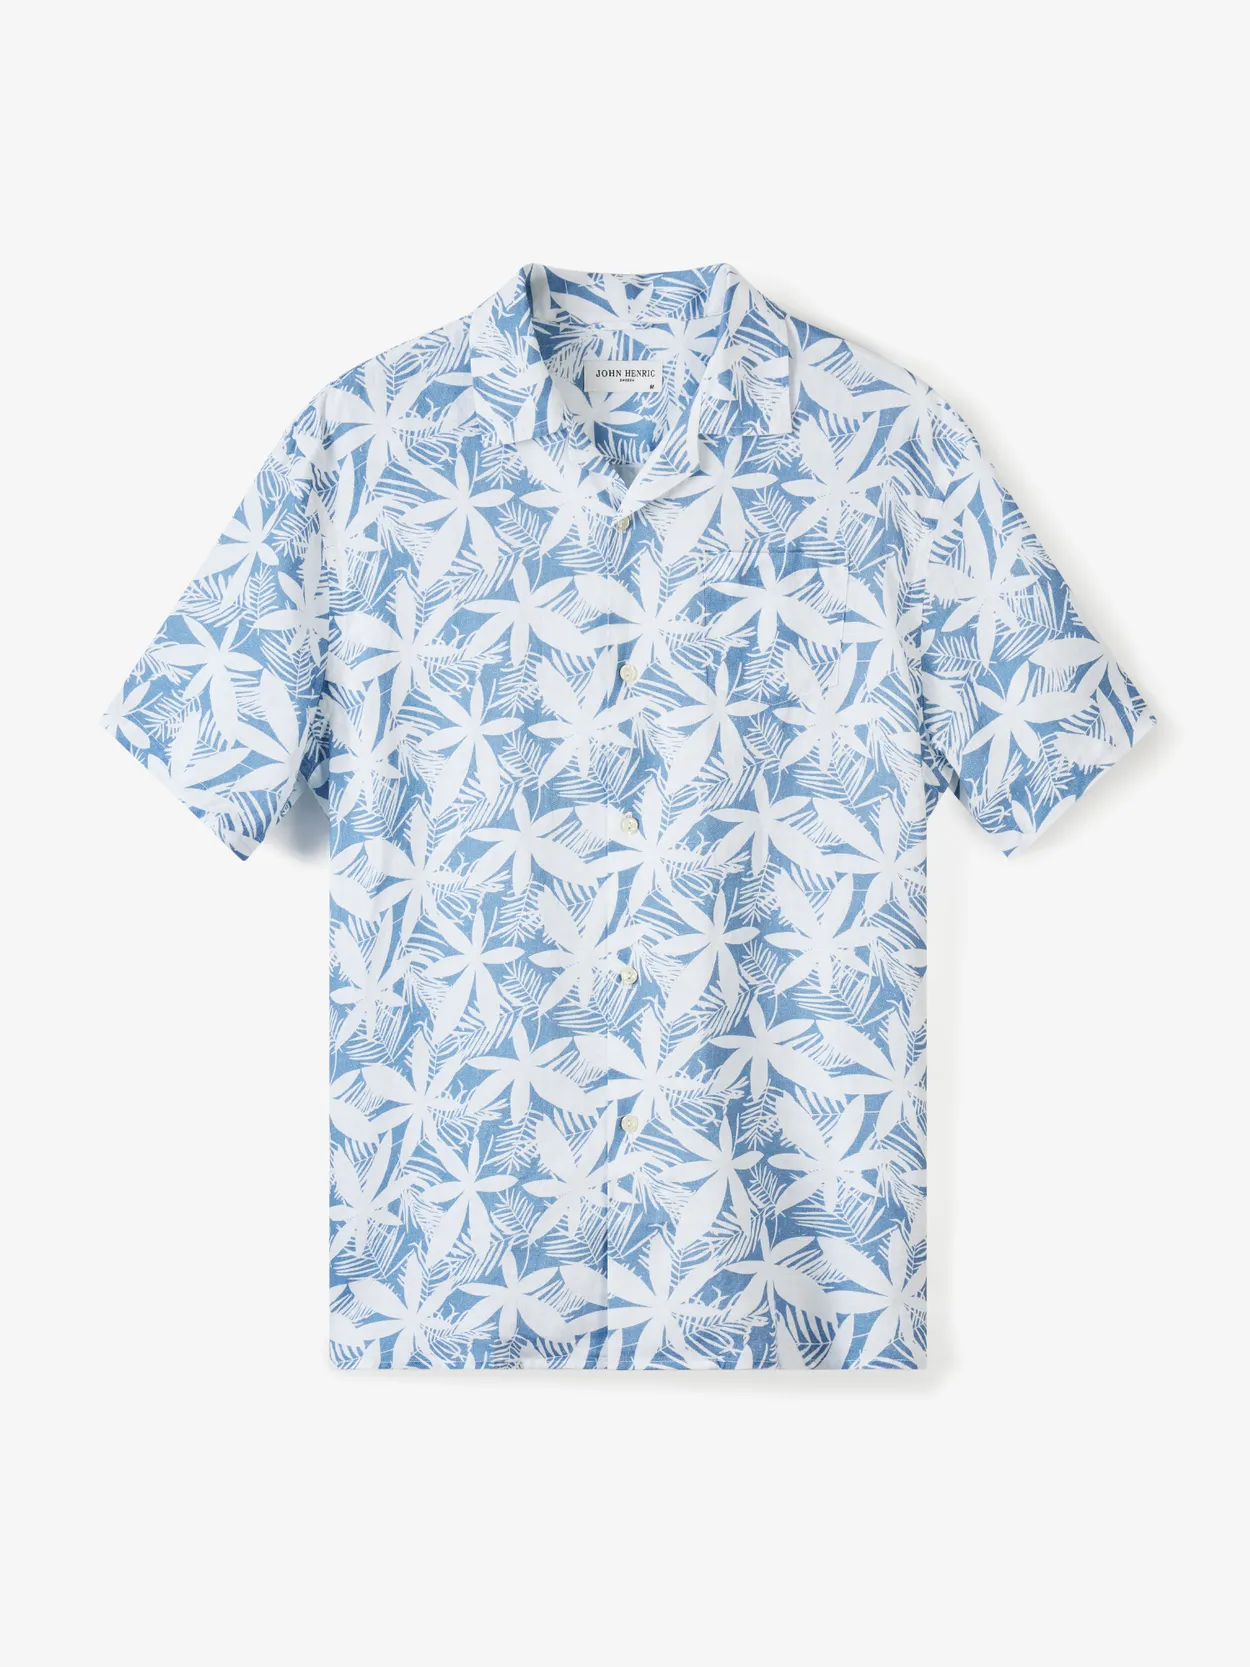 John Henry Hawaiian Shirts for Men